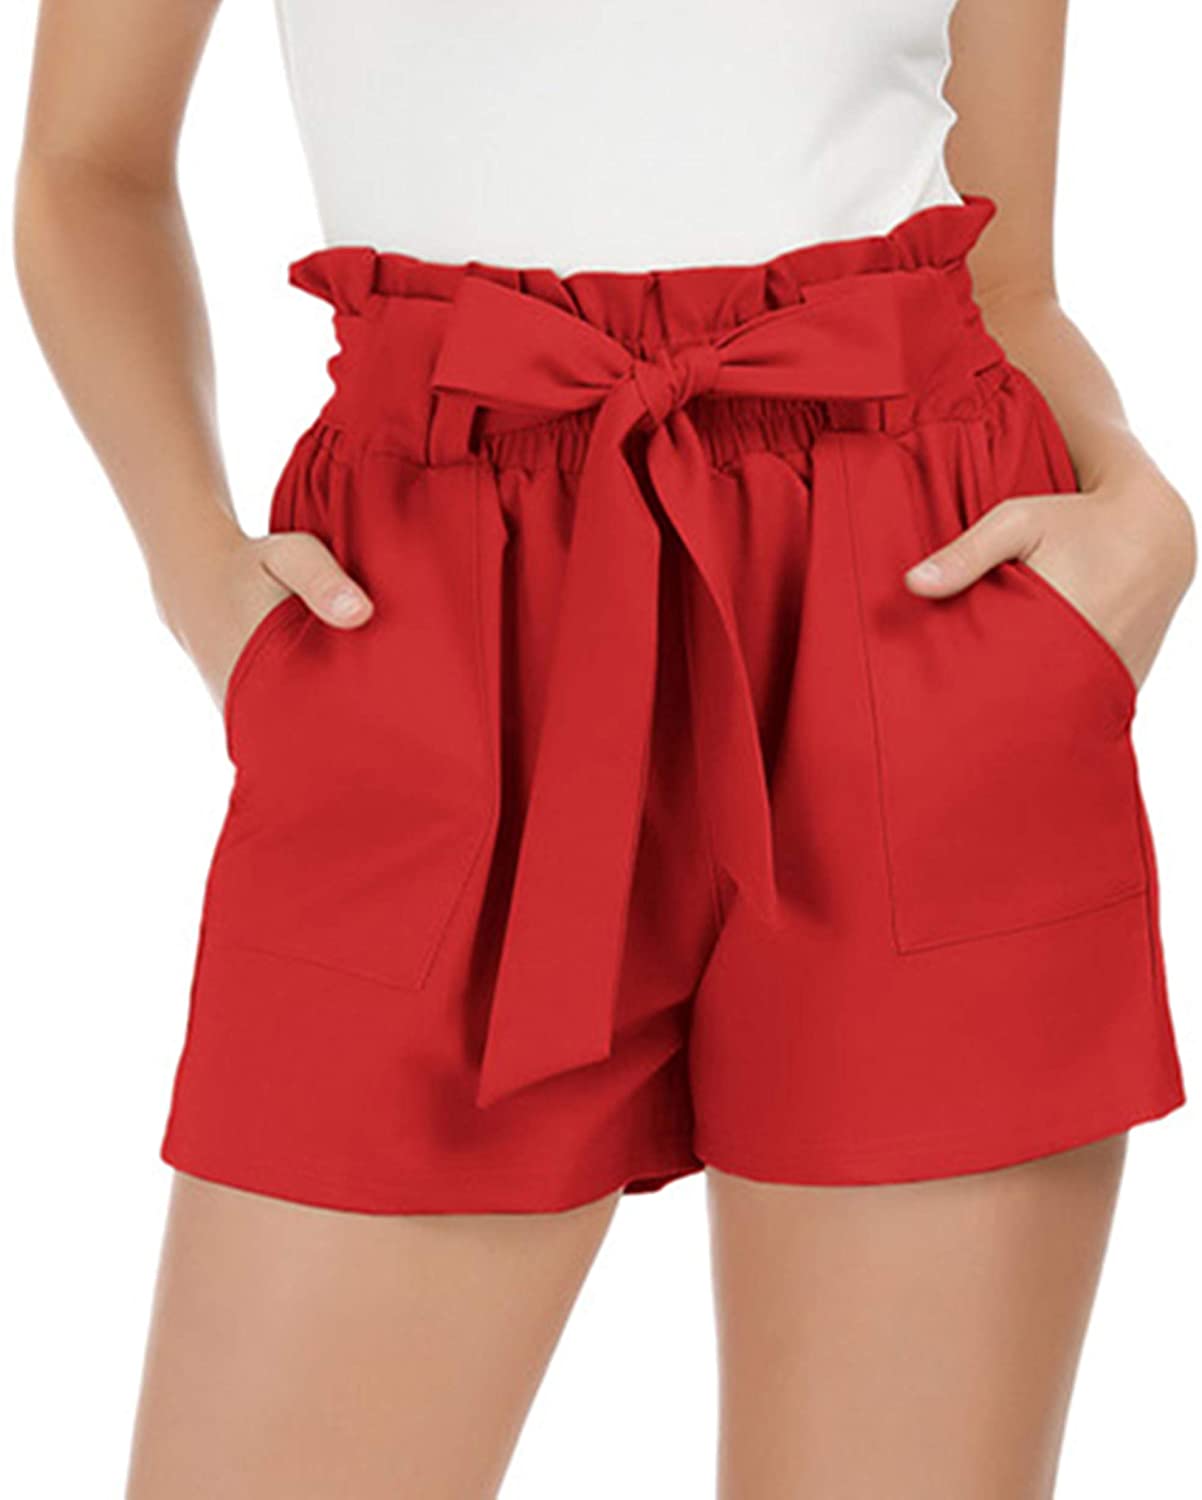 GRACE KARIN Women Bowknot Tie Waist Summer Casual Shorts with Pockets | eBay